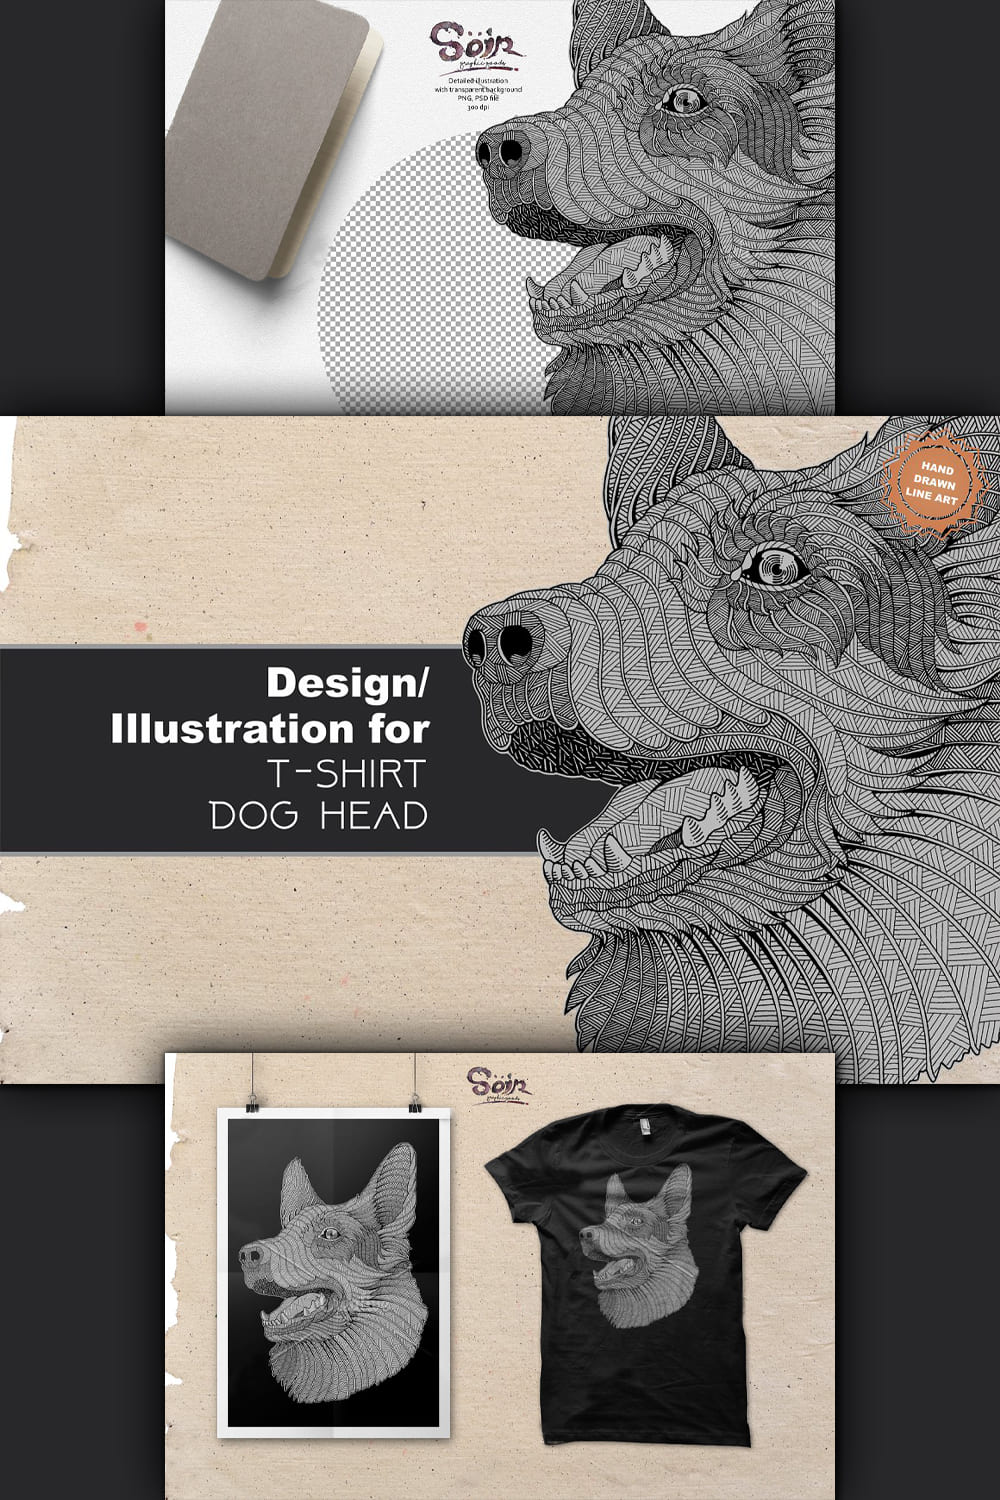 Dog T-shirt design (Hand drawn) - Pinterest.